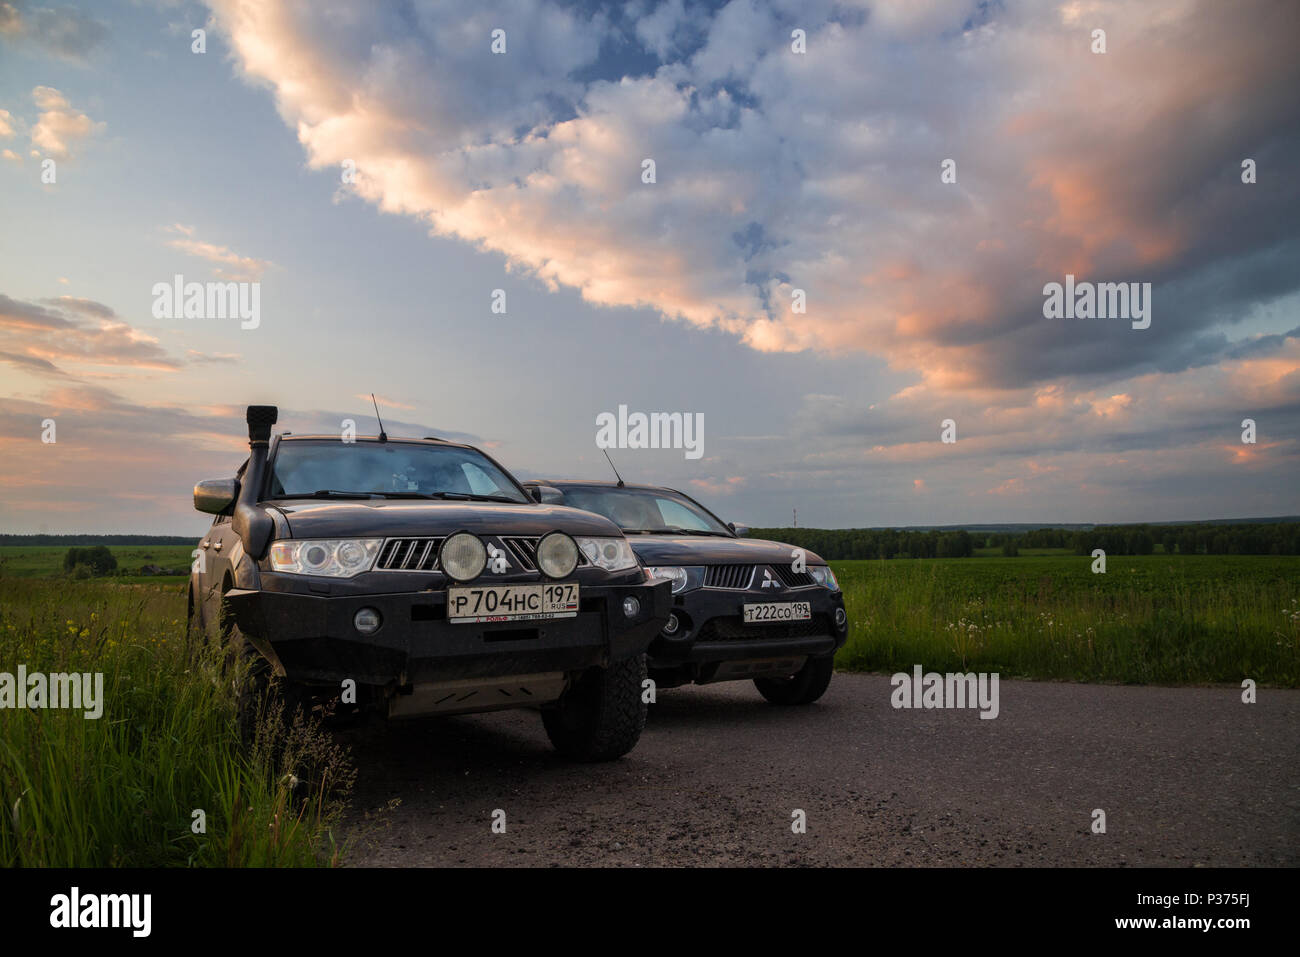 SUV Mitsubishi L200 and Pajero Sport,  Moscow, Russia. 05-11-2018 Stock Photo